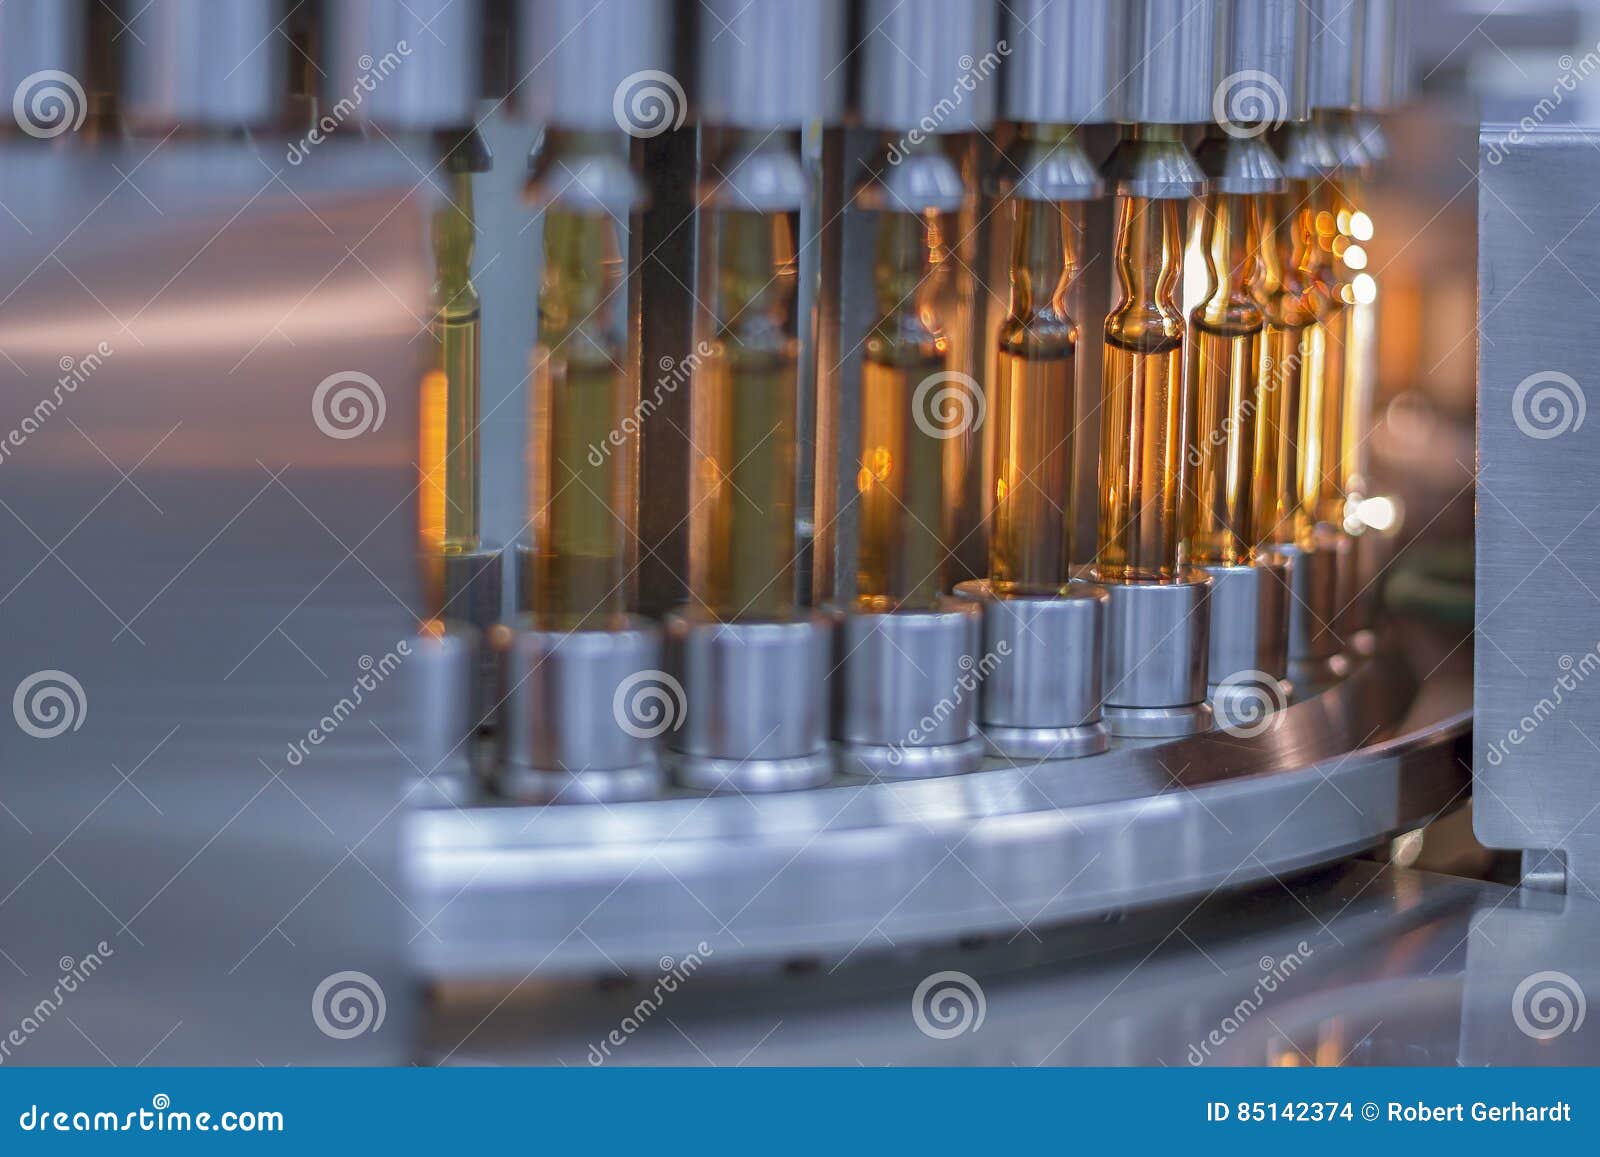 pharmaceutical optical ampule/ vial inspection machine